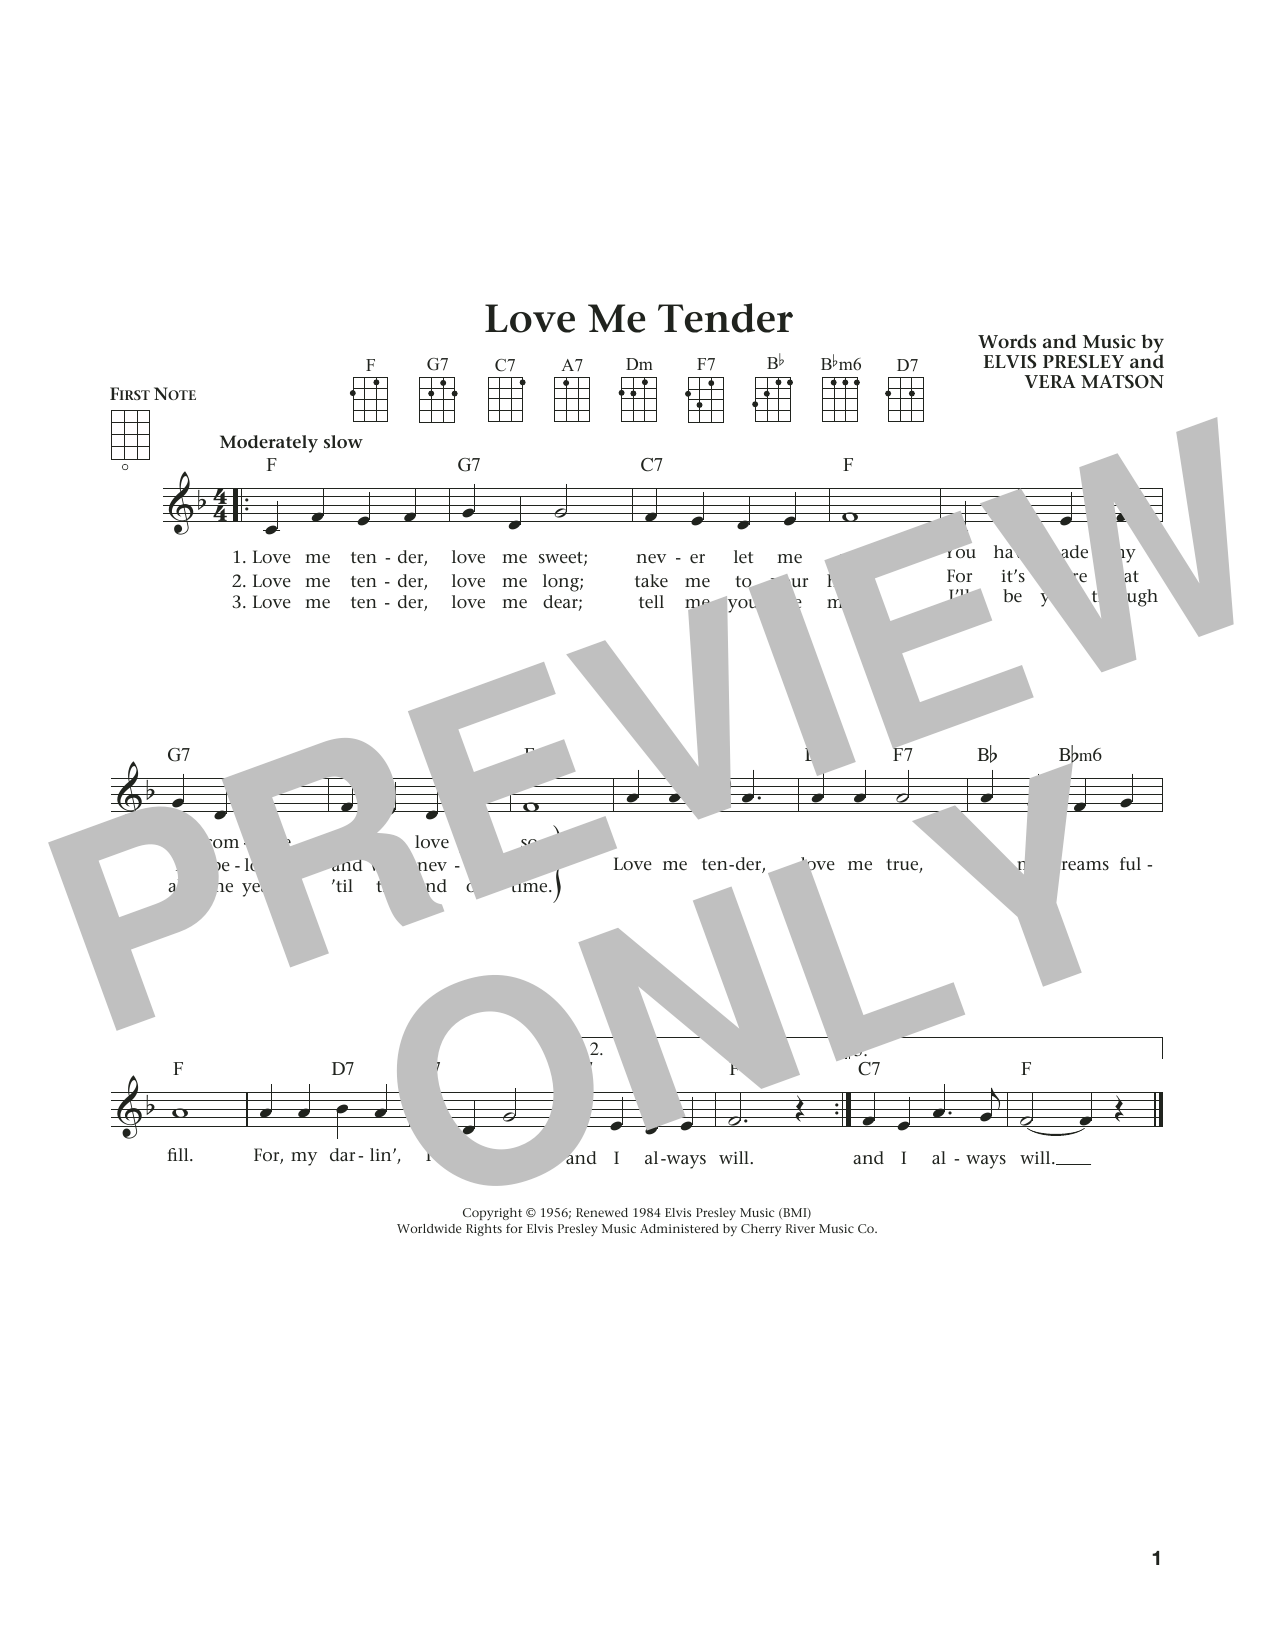 Download Elvis Presley Love Me Tender Sheet Music and learn how to play Ukulele PDF digital score in minutes